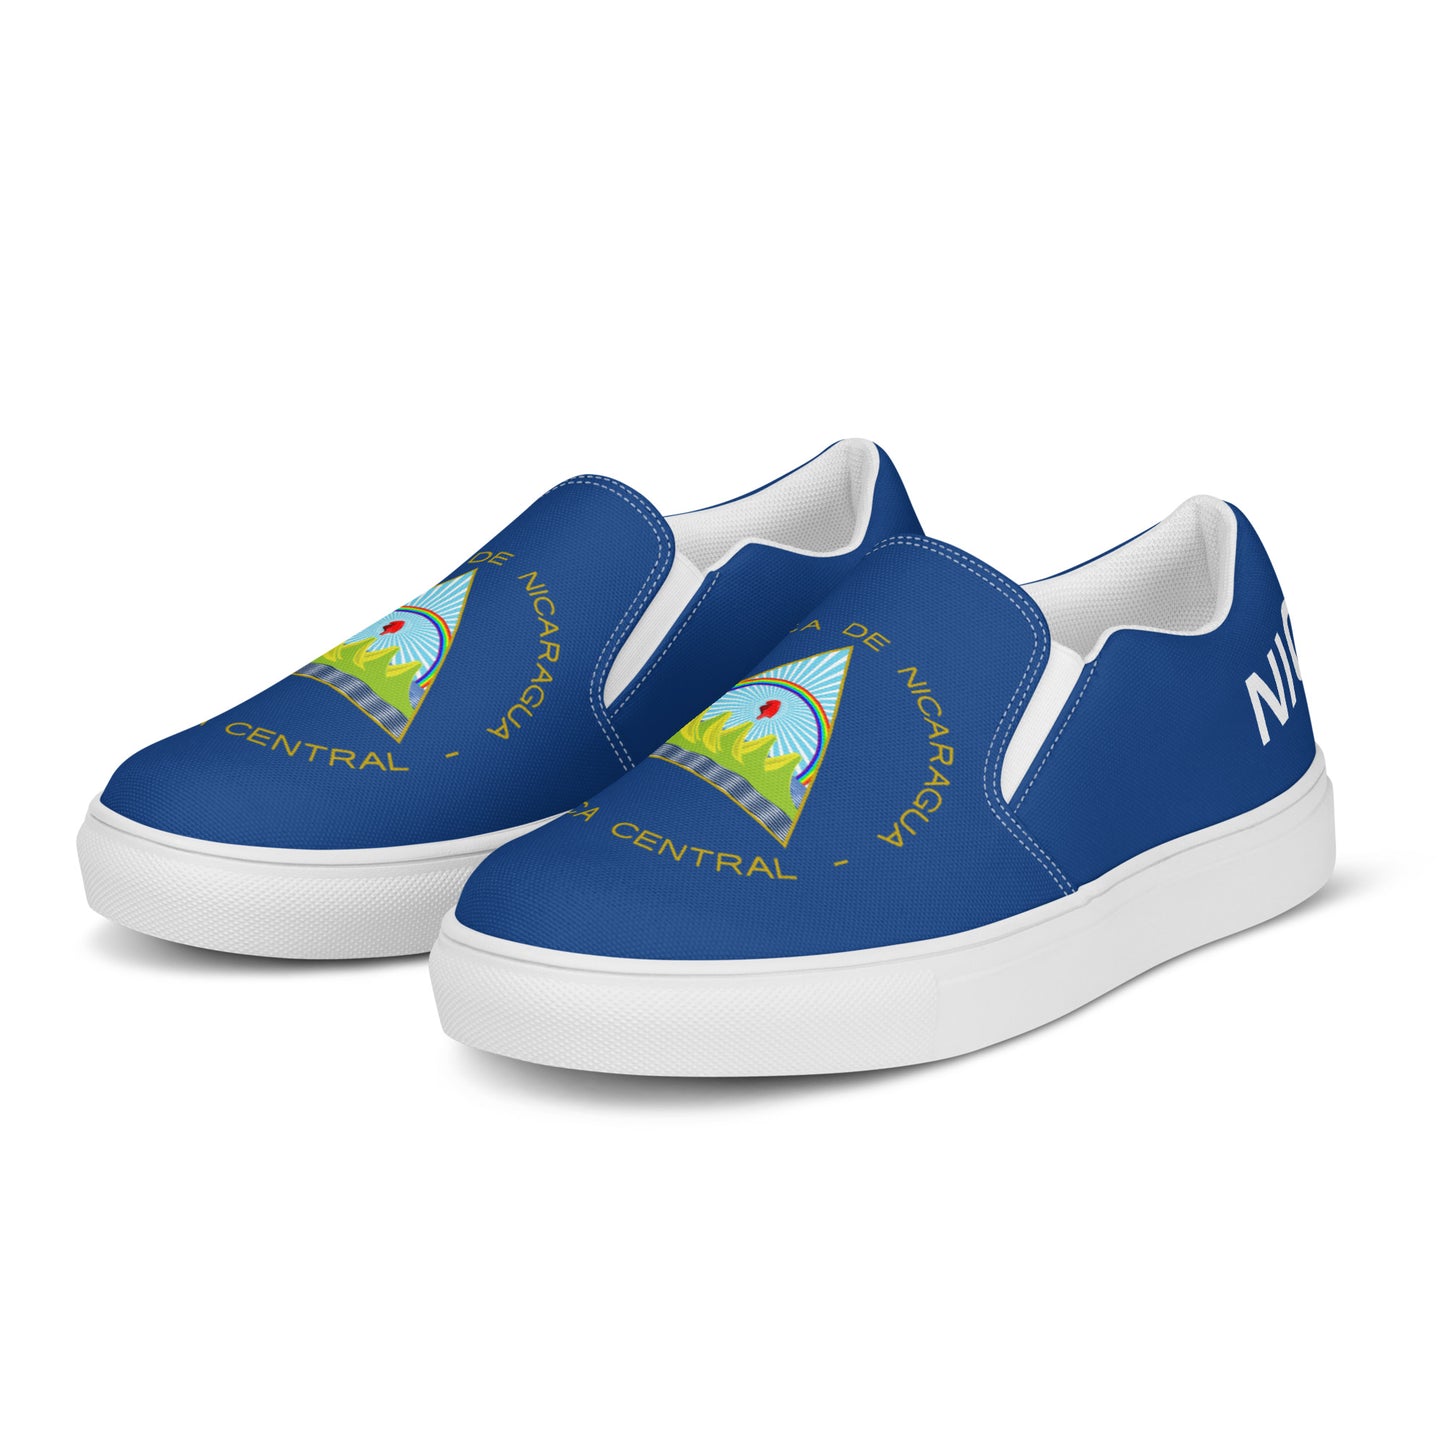 Nicaragua - Women - Blue - Slip-on shoes